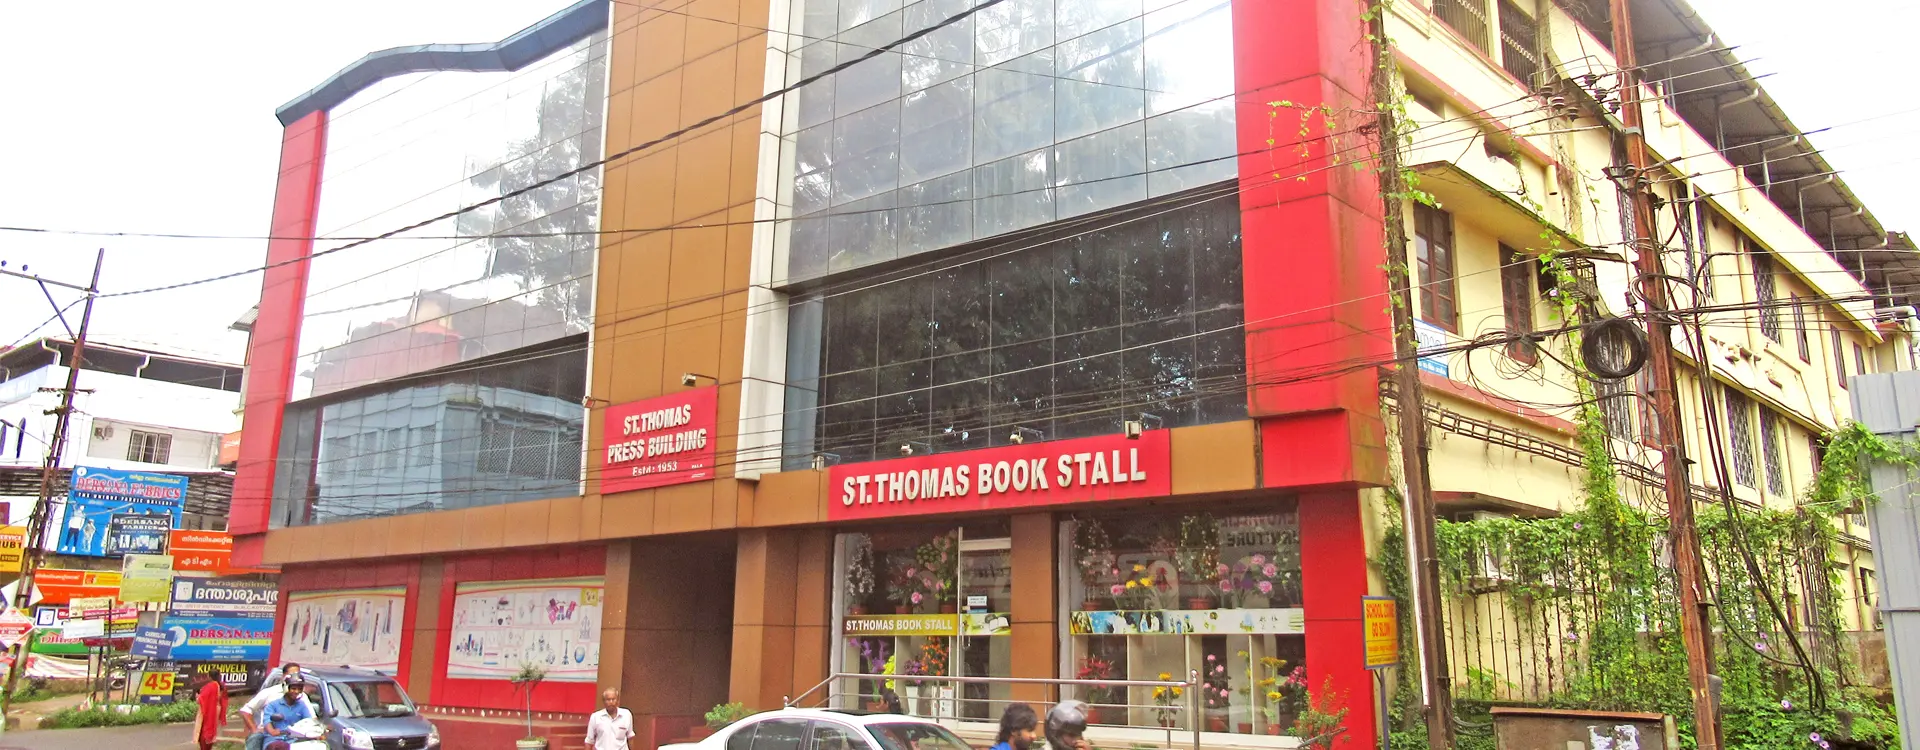 St. Thomas Book Stall & Press, Pala